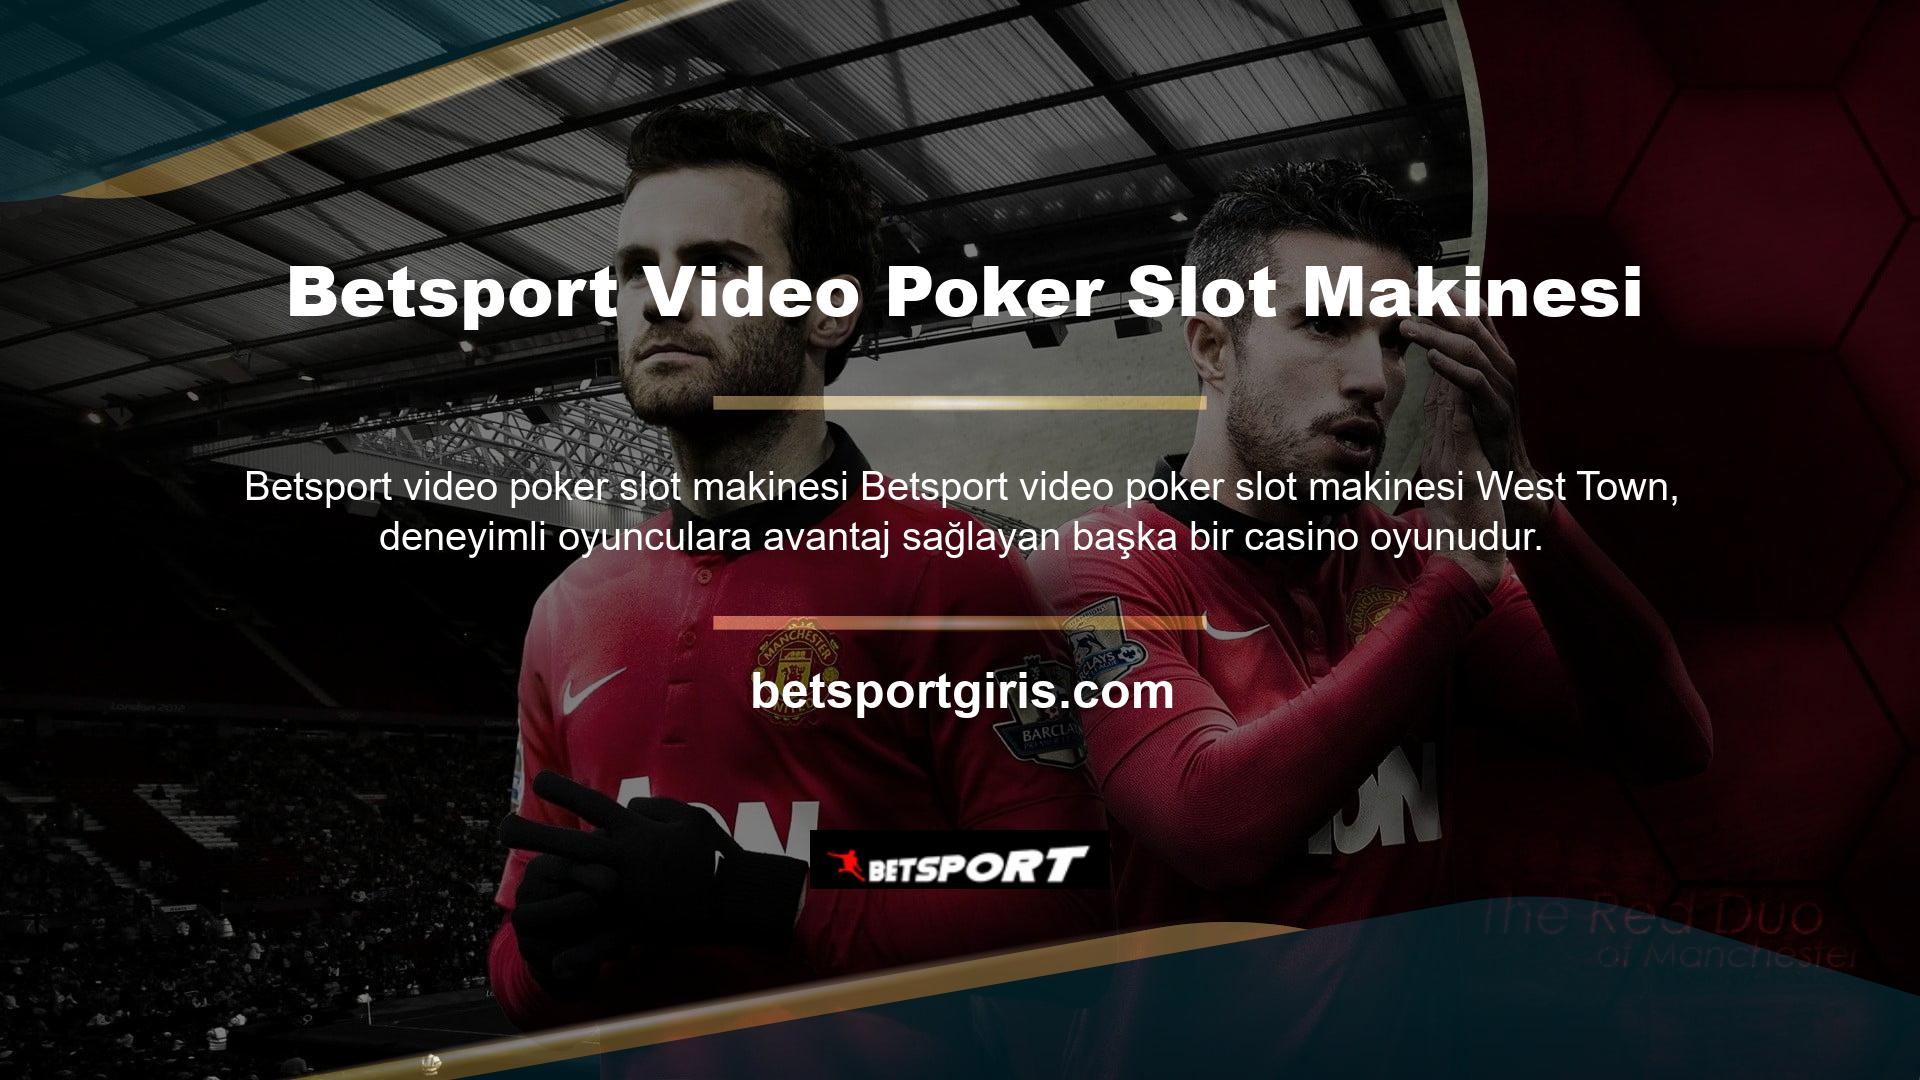 Slotlar video pokerden daha az popülerdir